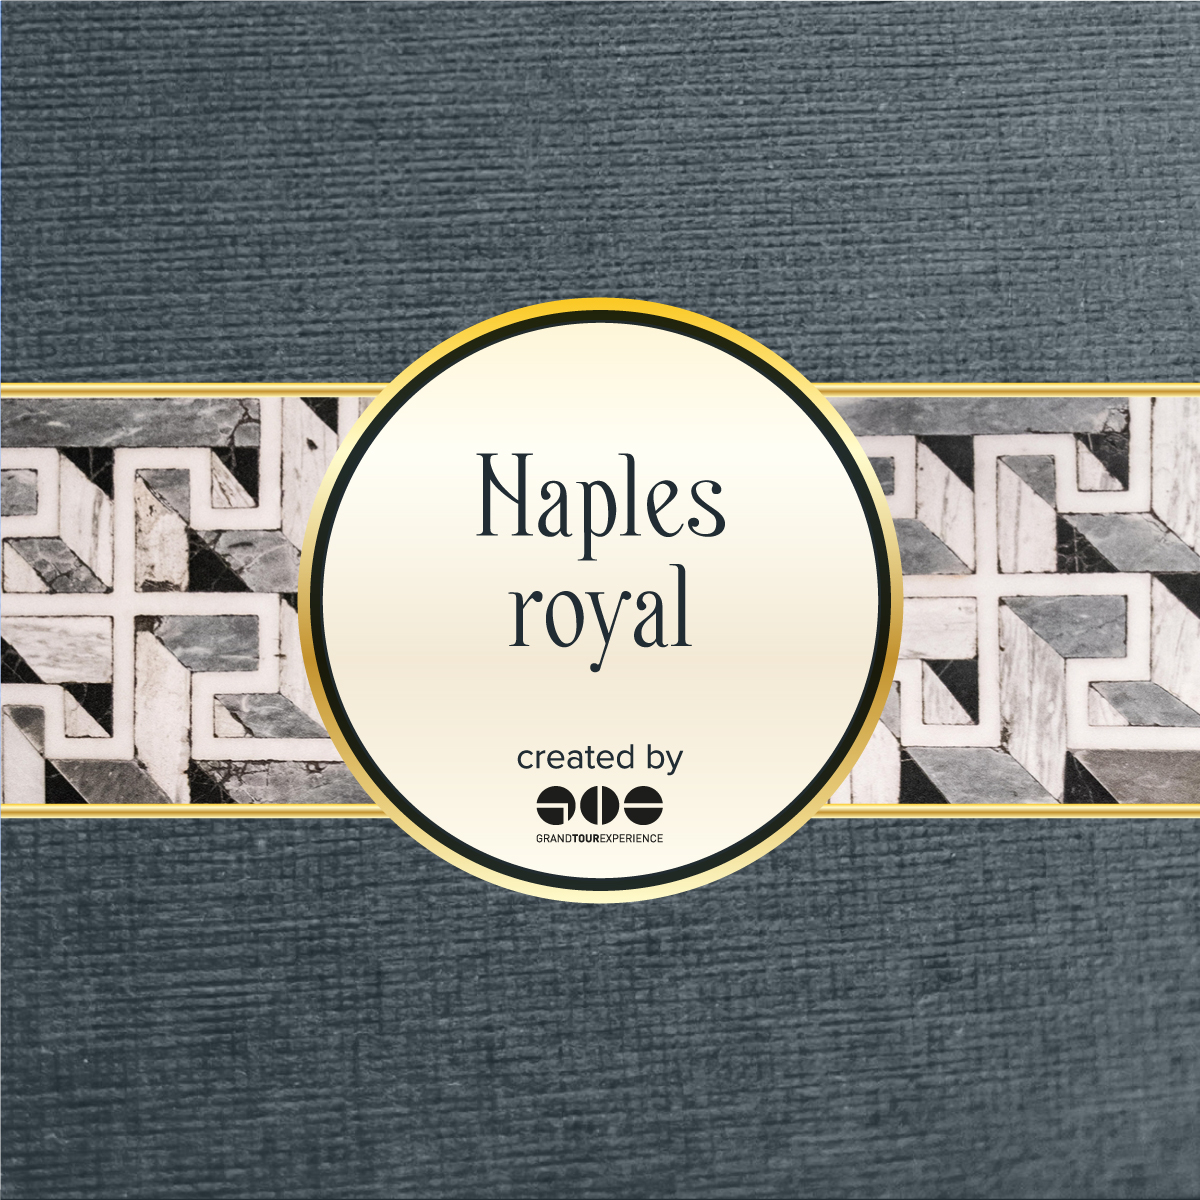 Royal Naples: between Kings and Castles